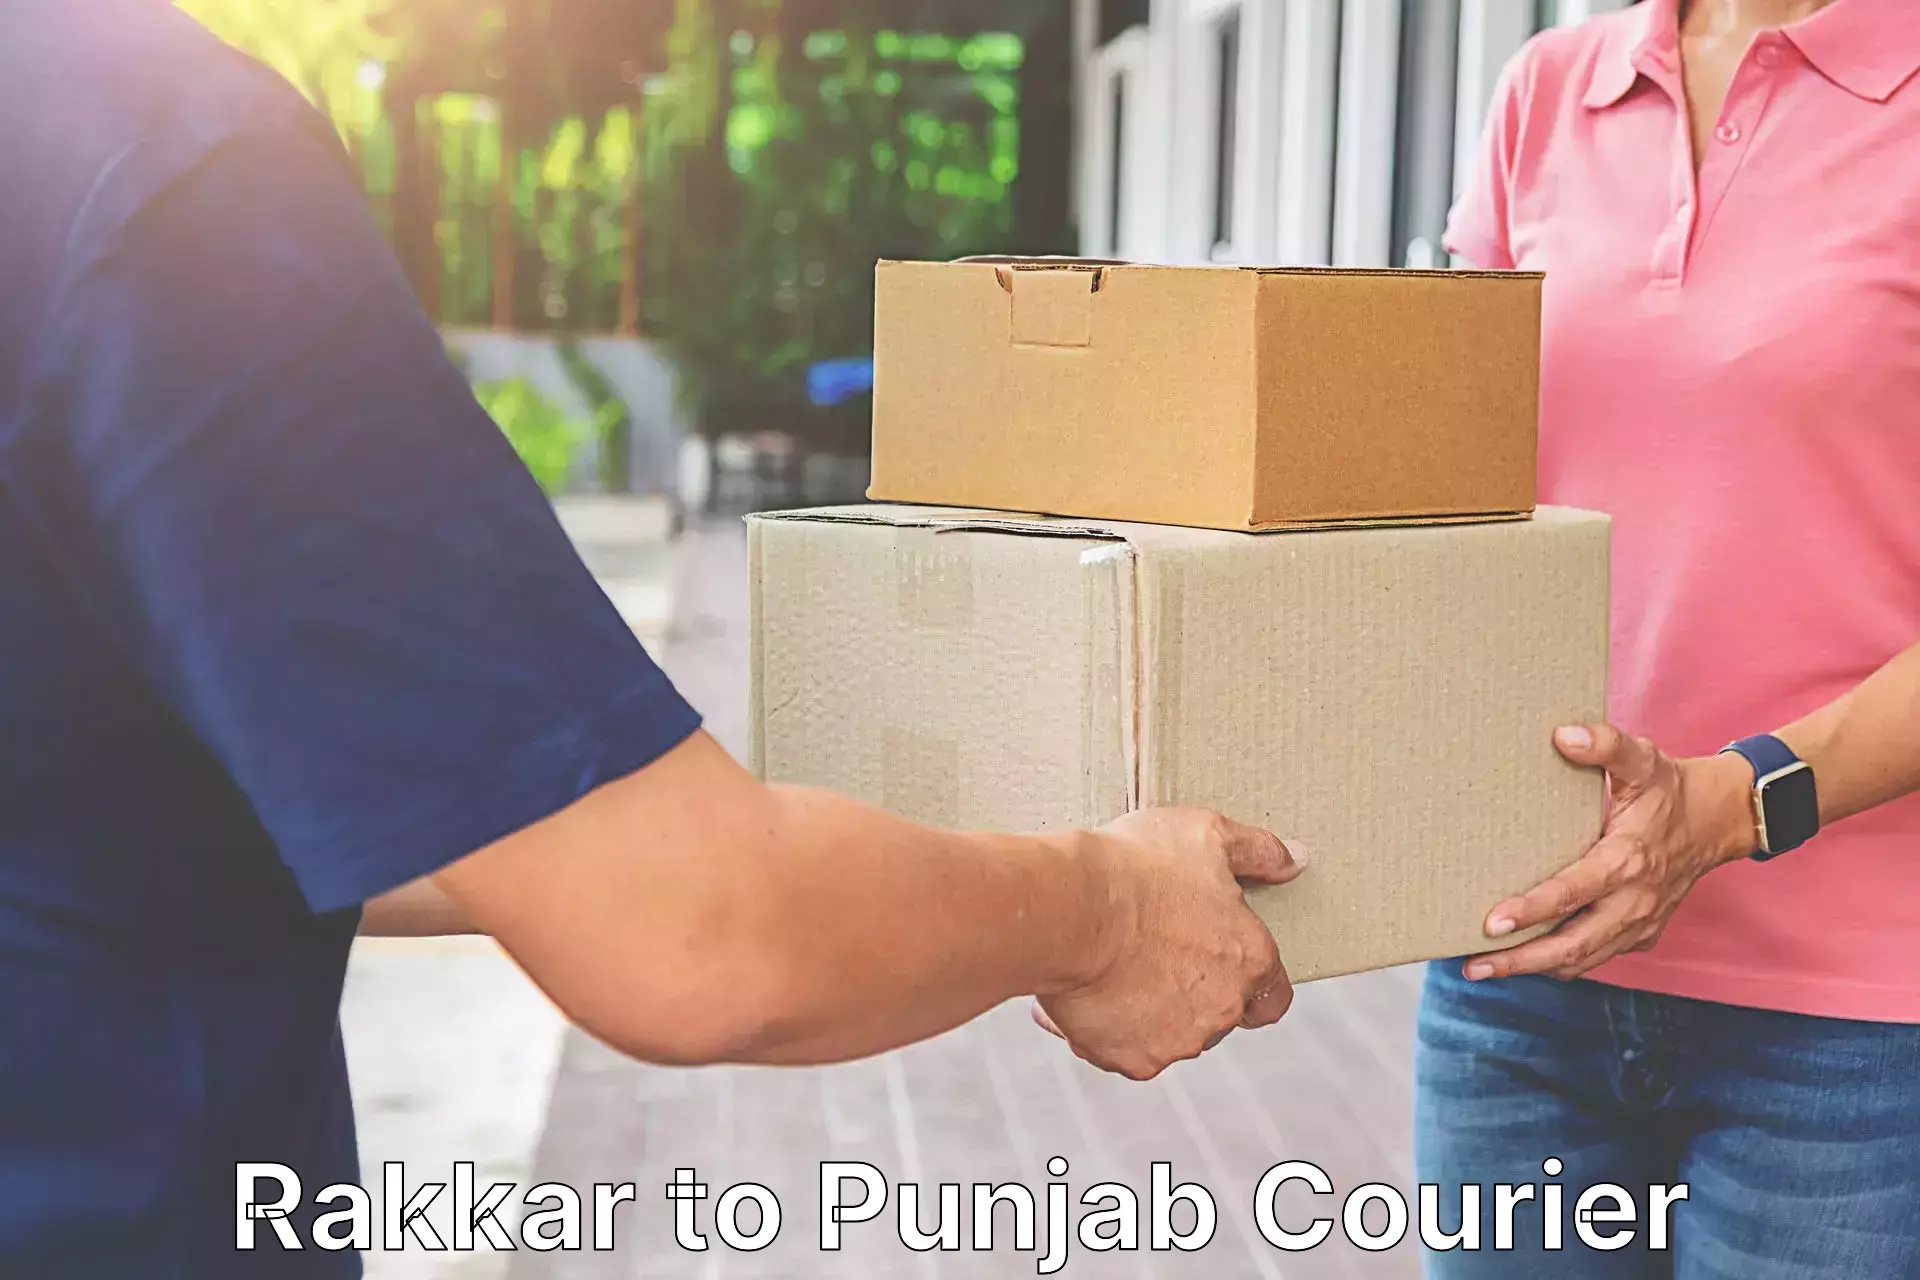 International courier networks Rakkar to Punjab